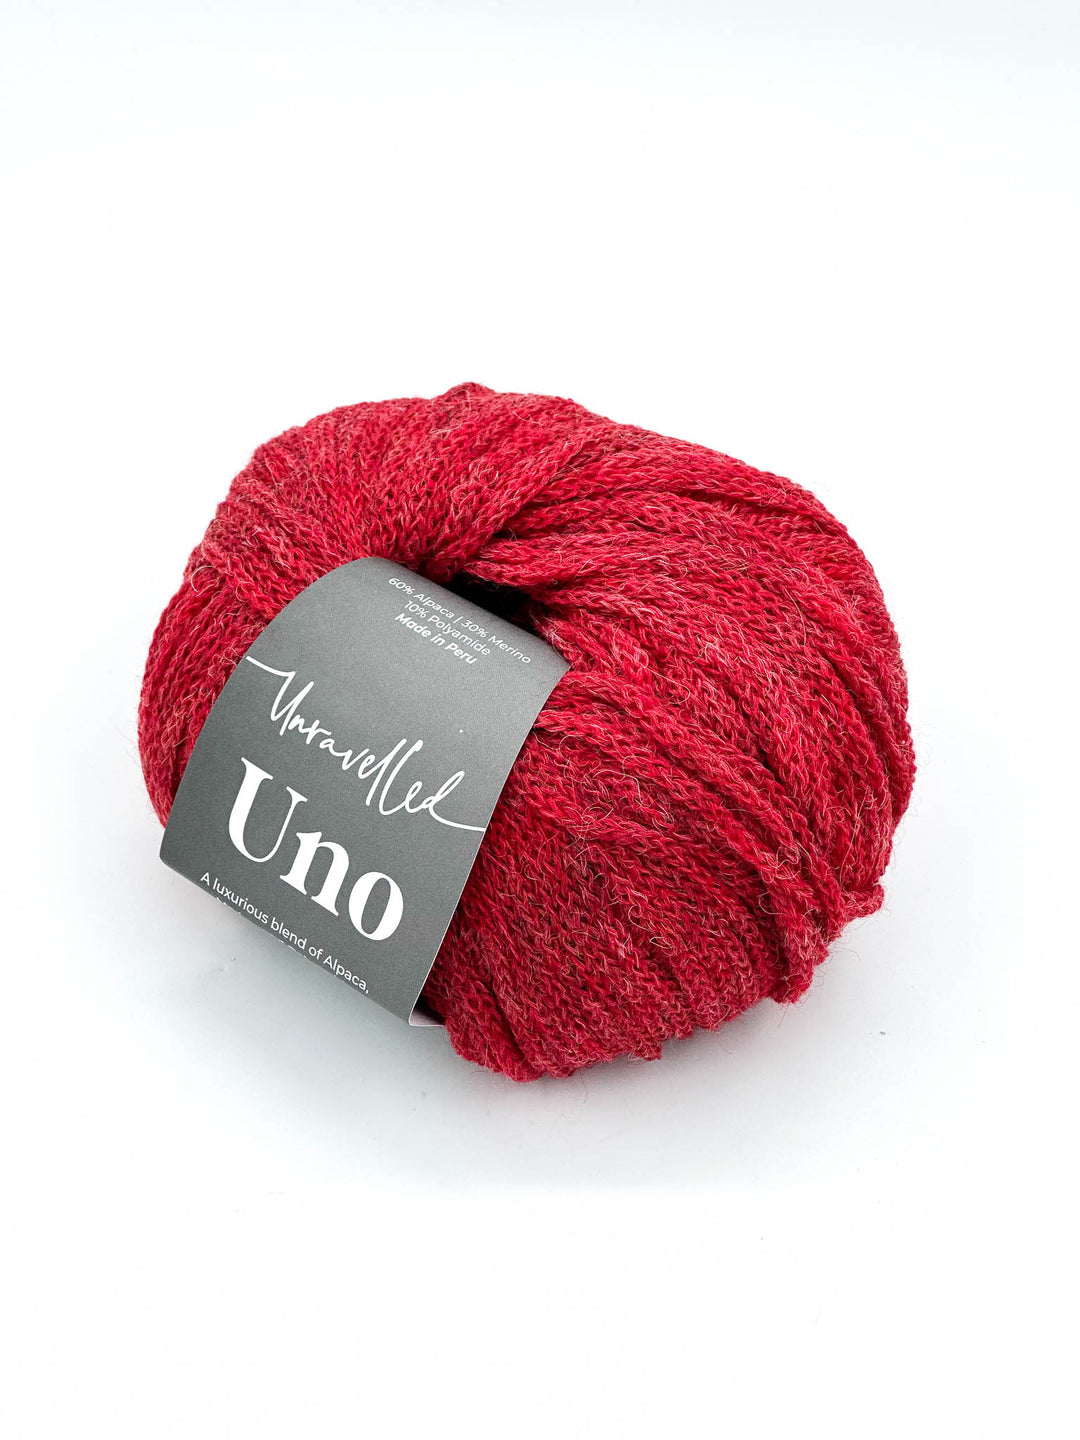 The Uno Lofty Wrap